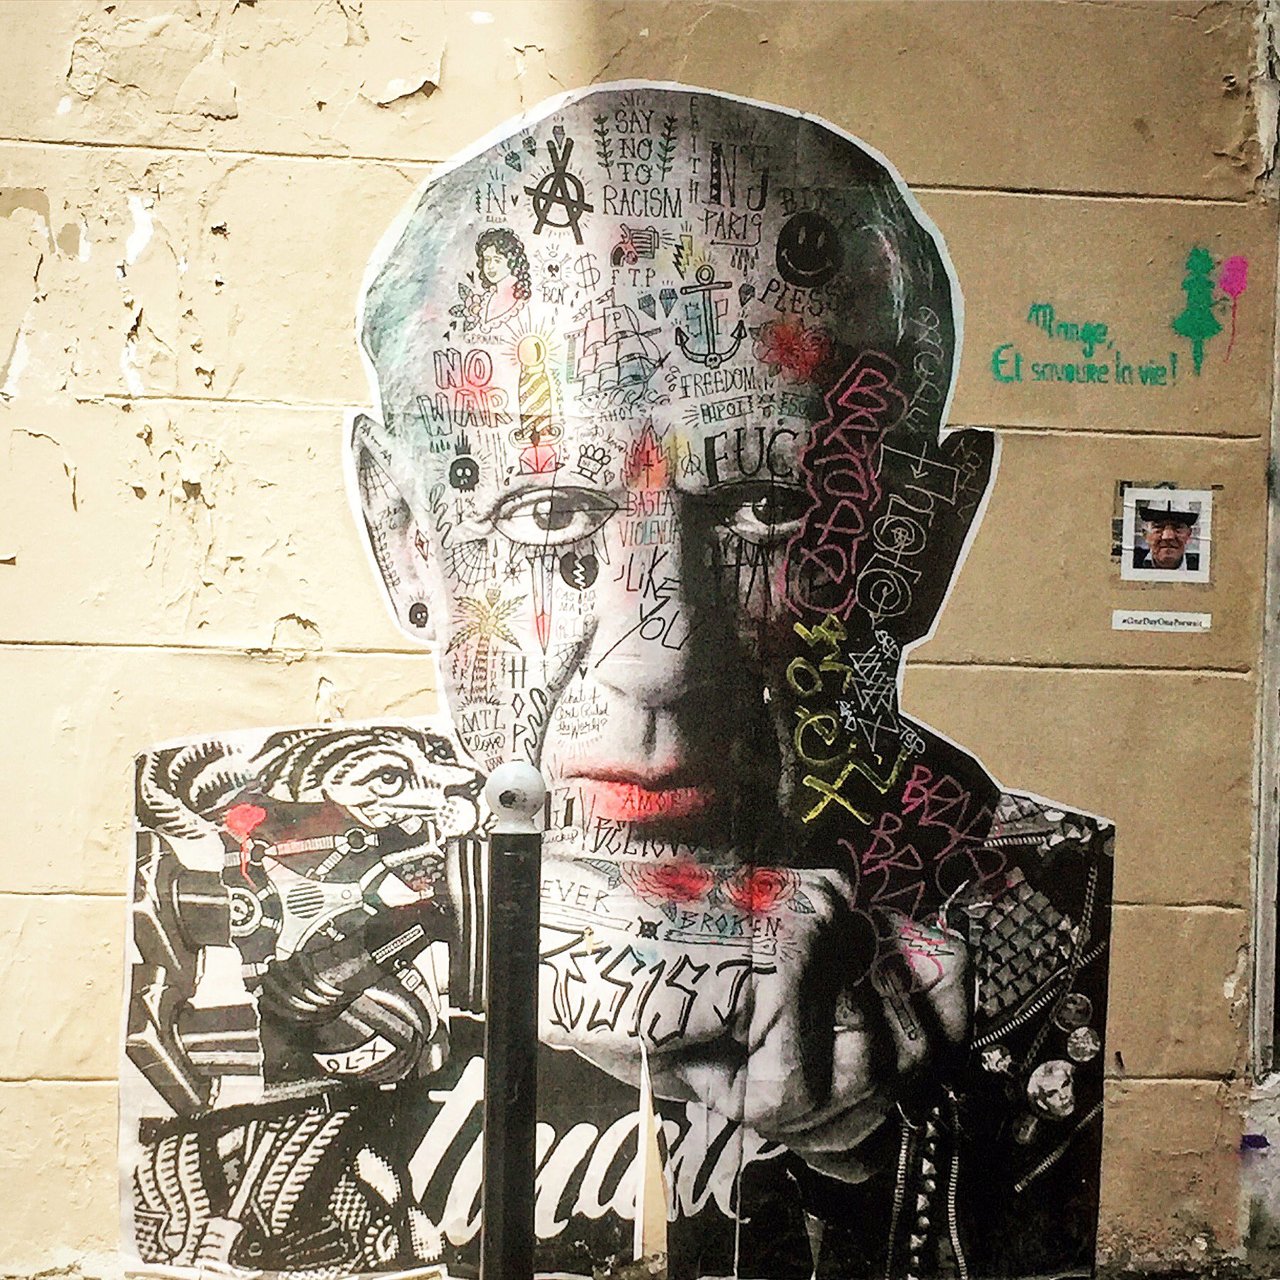 Pablo Picasso by @stikki_peaches #stikkipeaches #picasso #pablopicasso #rebel #icon #painter #surealism #cubism #spain #andalucia #streetart #graffiti #graff #spray #bombing #wall #urbanart #graffart #nirindastreet https://t.co/lNZKjbzJgo